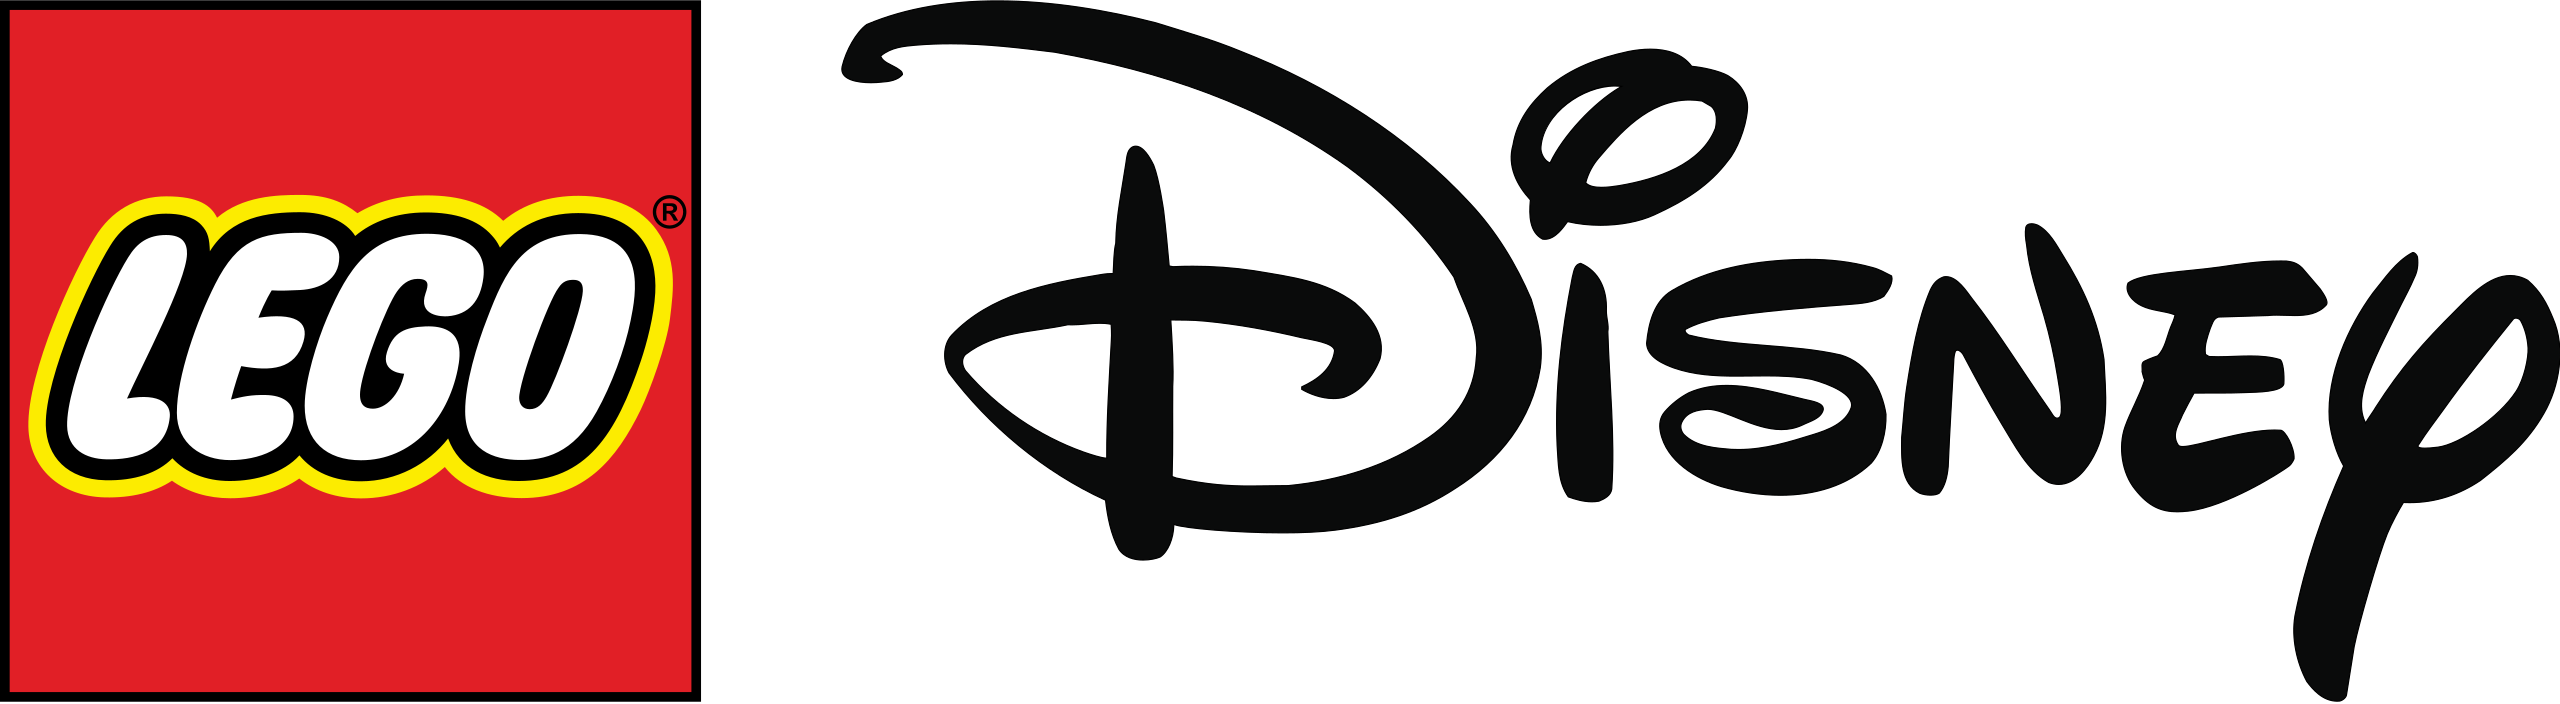 LEGO Disney logo